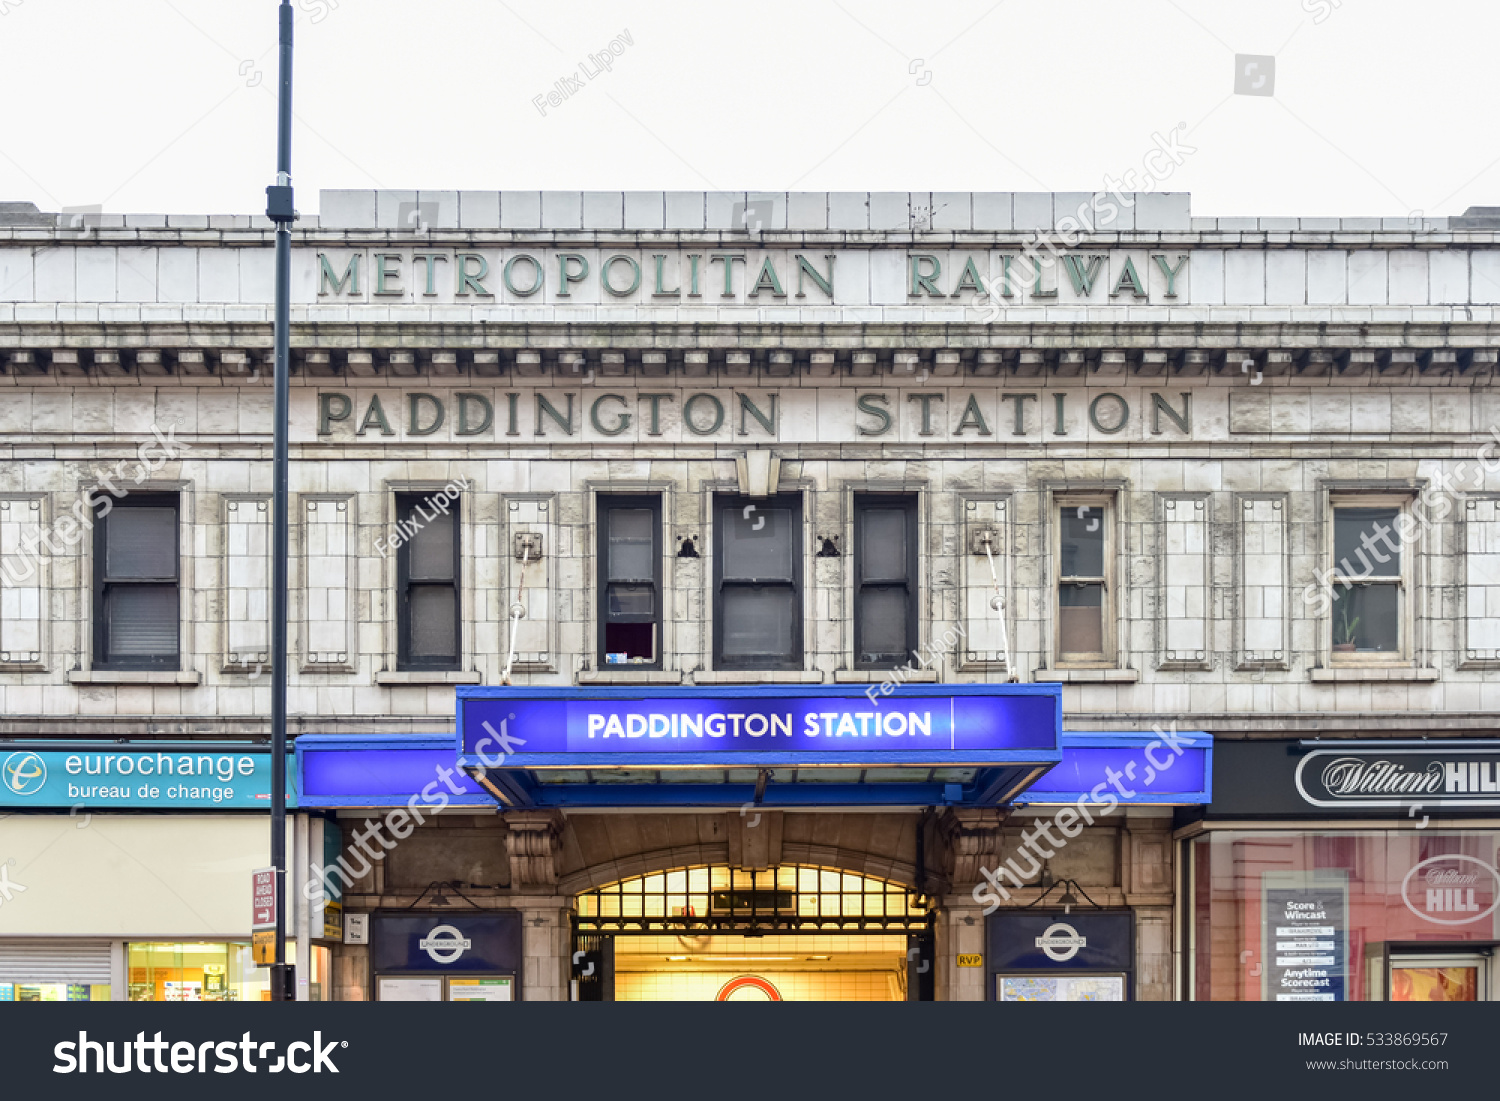 Stock Photo London Uk November Paddington Railway Station In London United Kingdom 533869567 